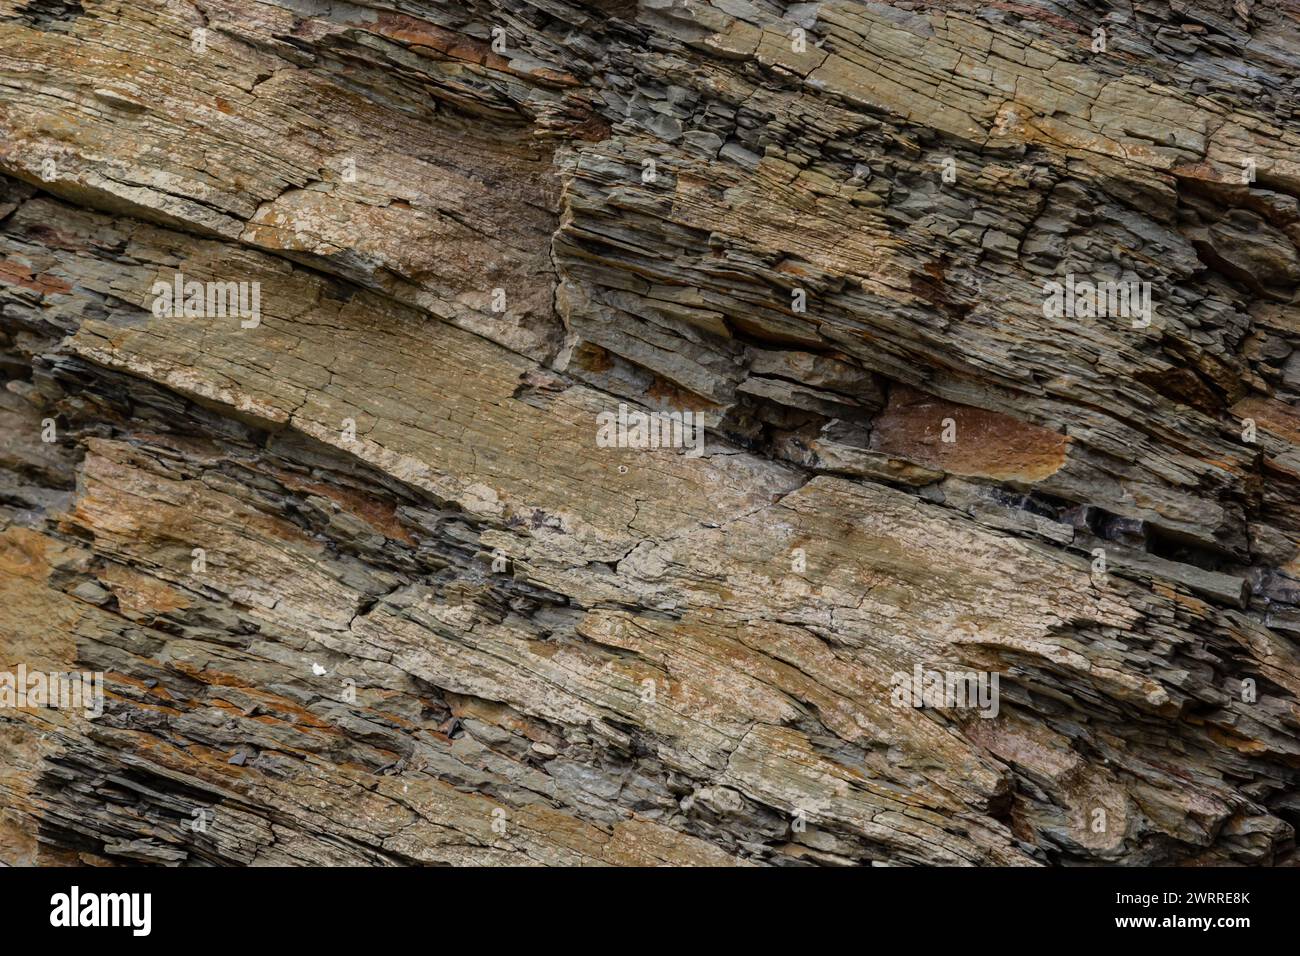 Rough rocky mountain texture. Sedimentary rock texture. Stock Photo